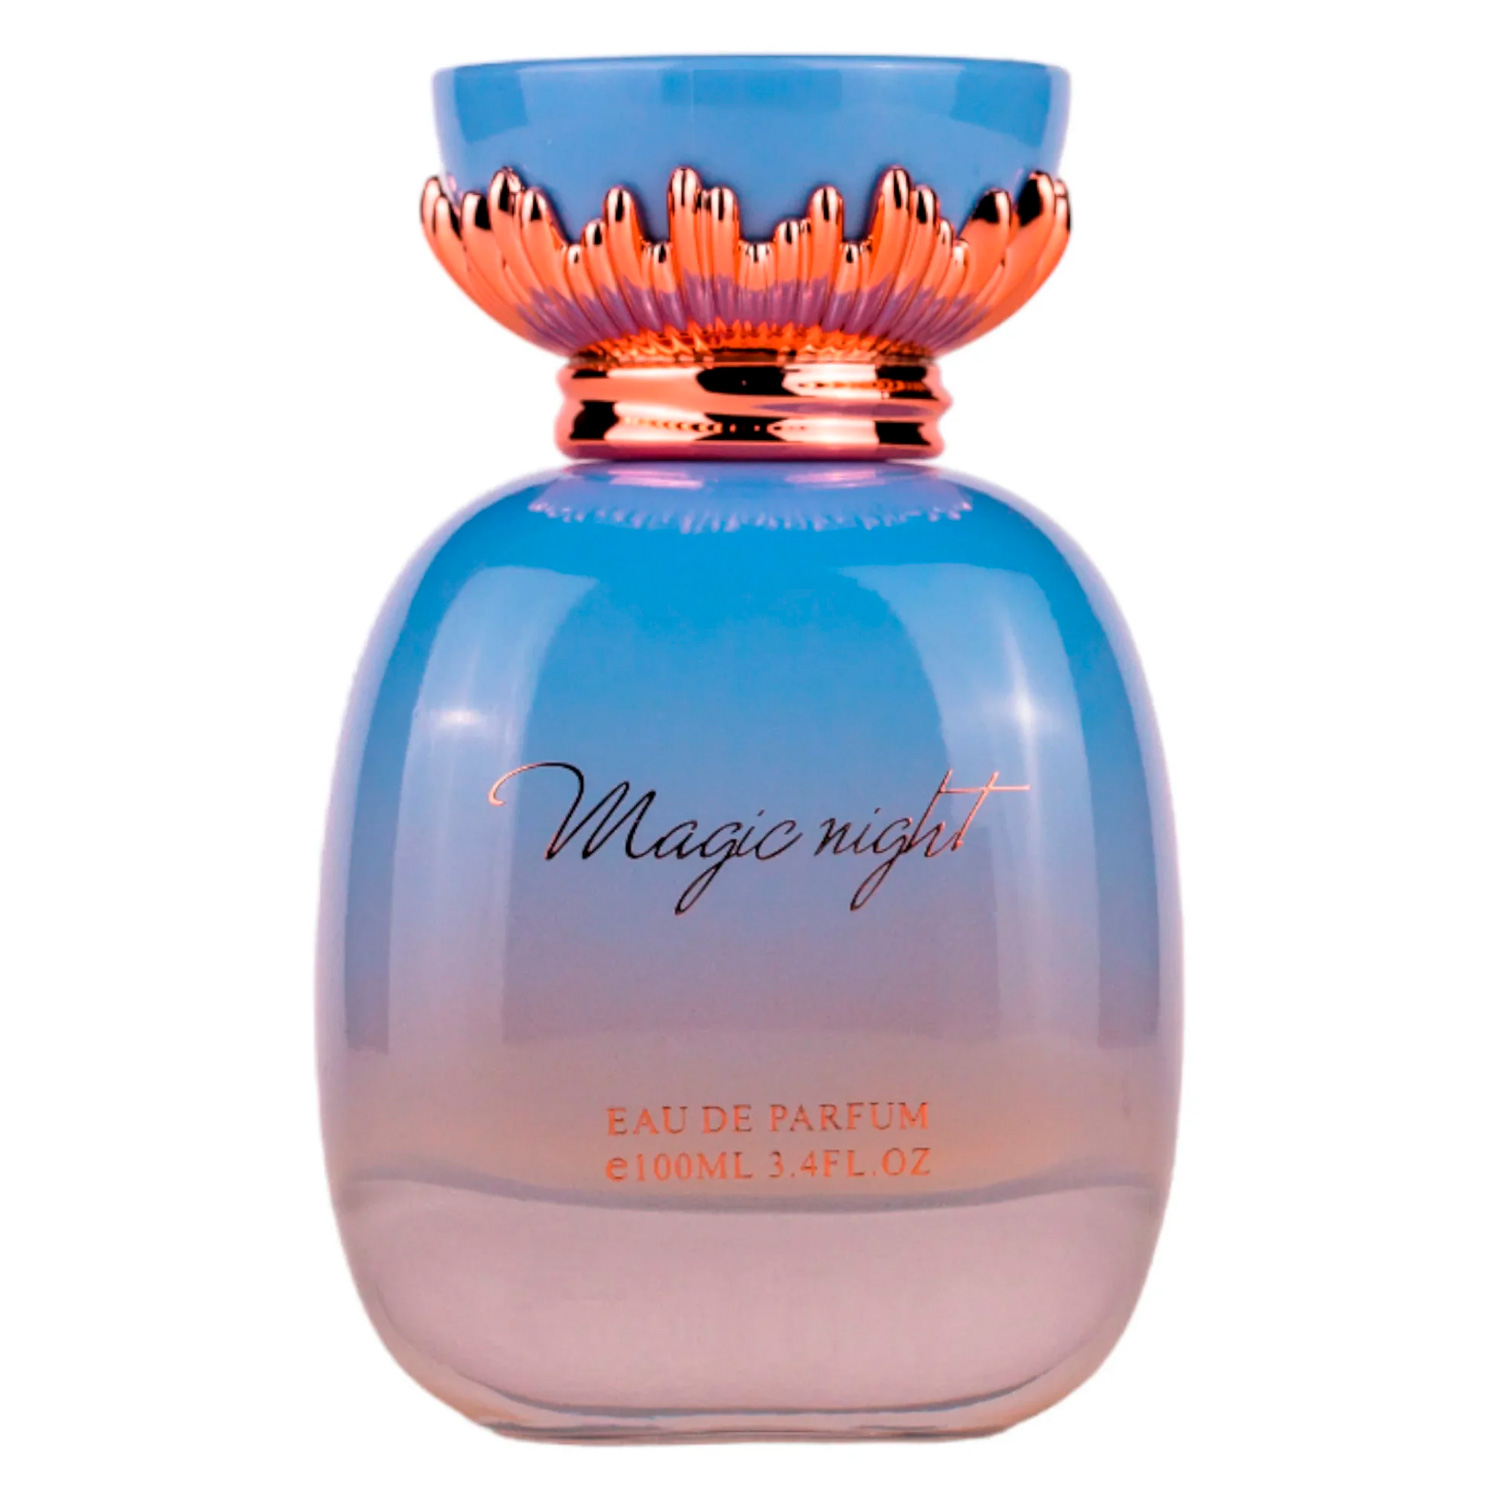 Perfume Maison Asrar Magic Night Eau de Parfum Feminino 100ml